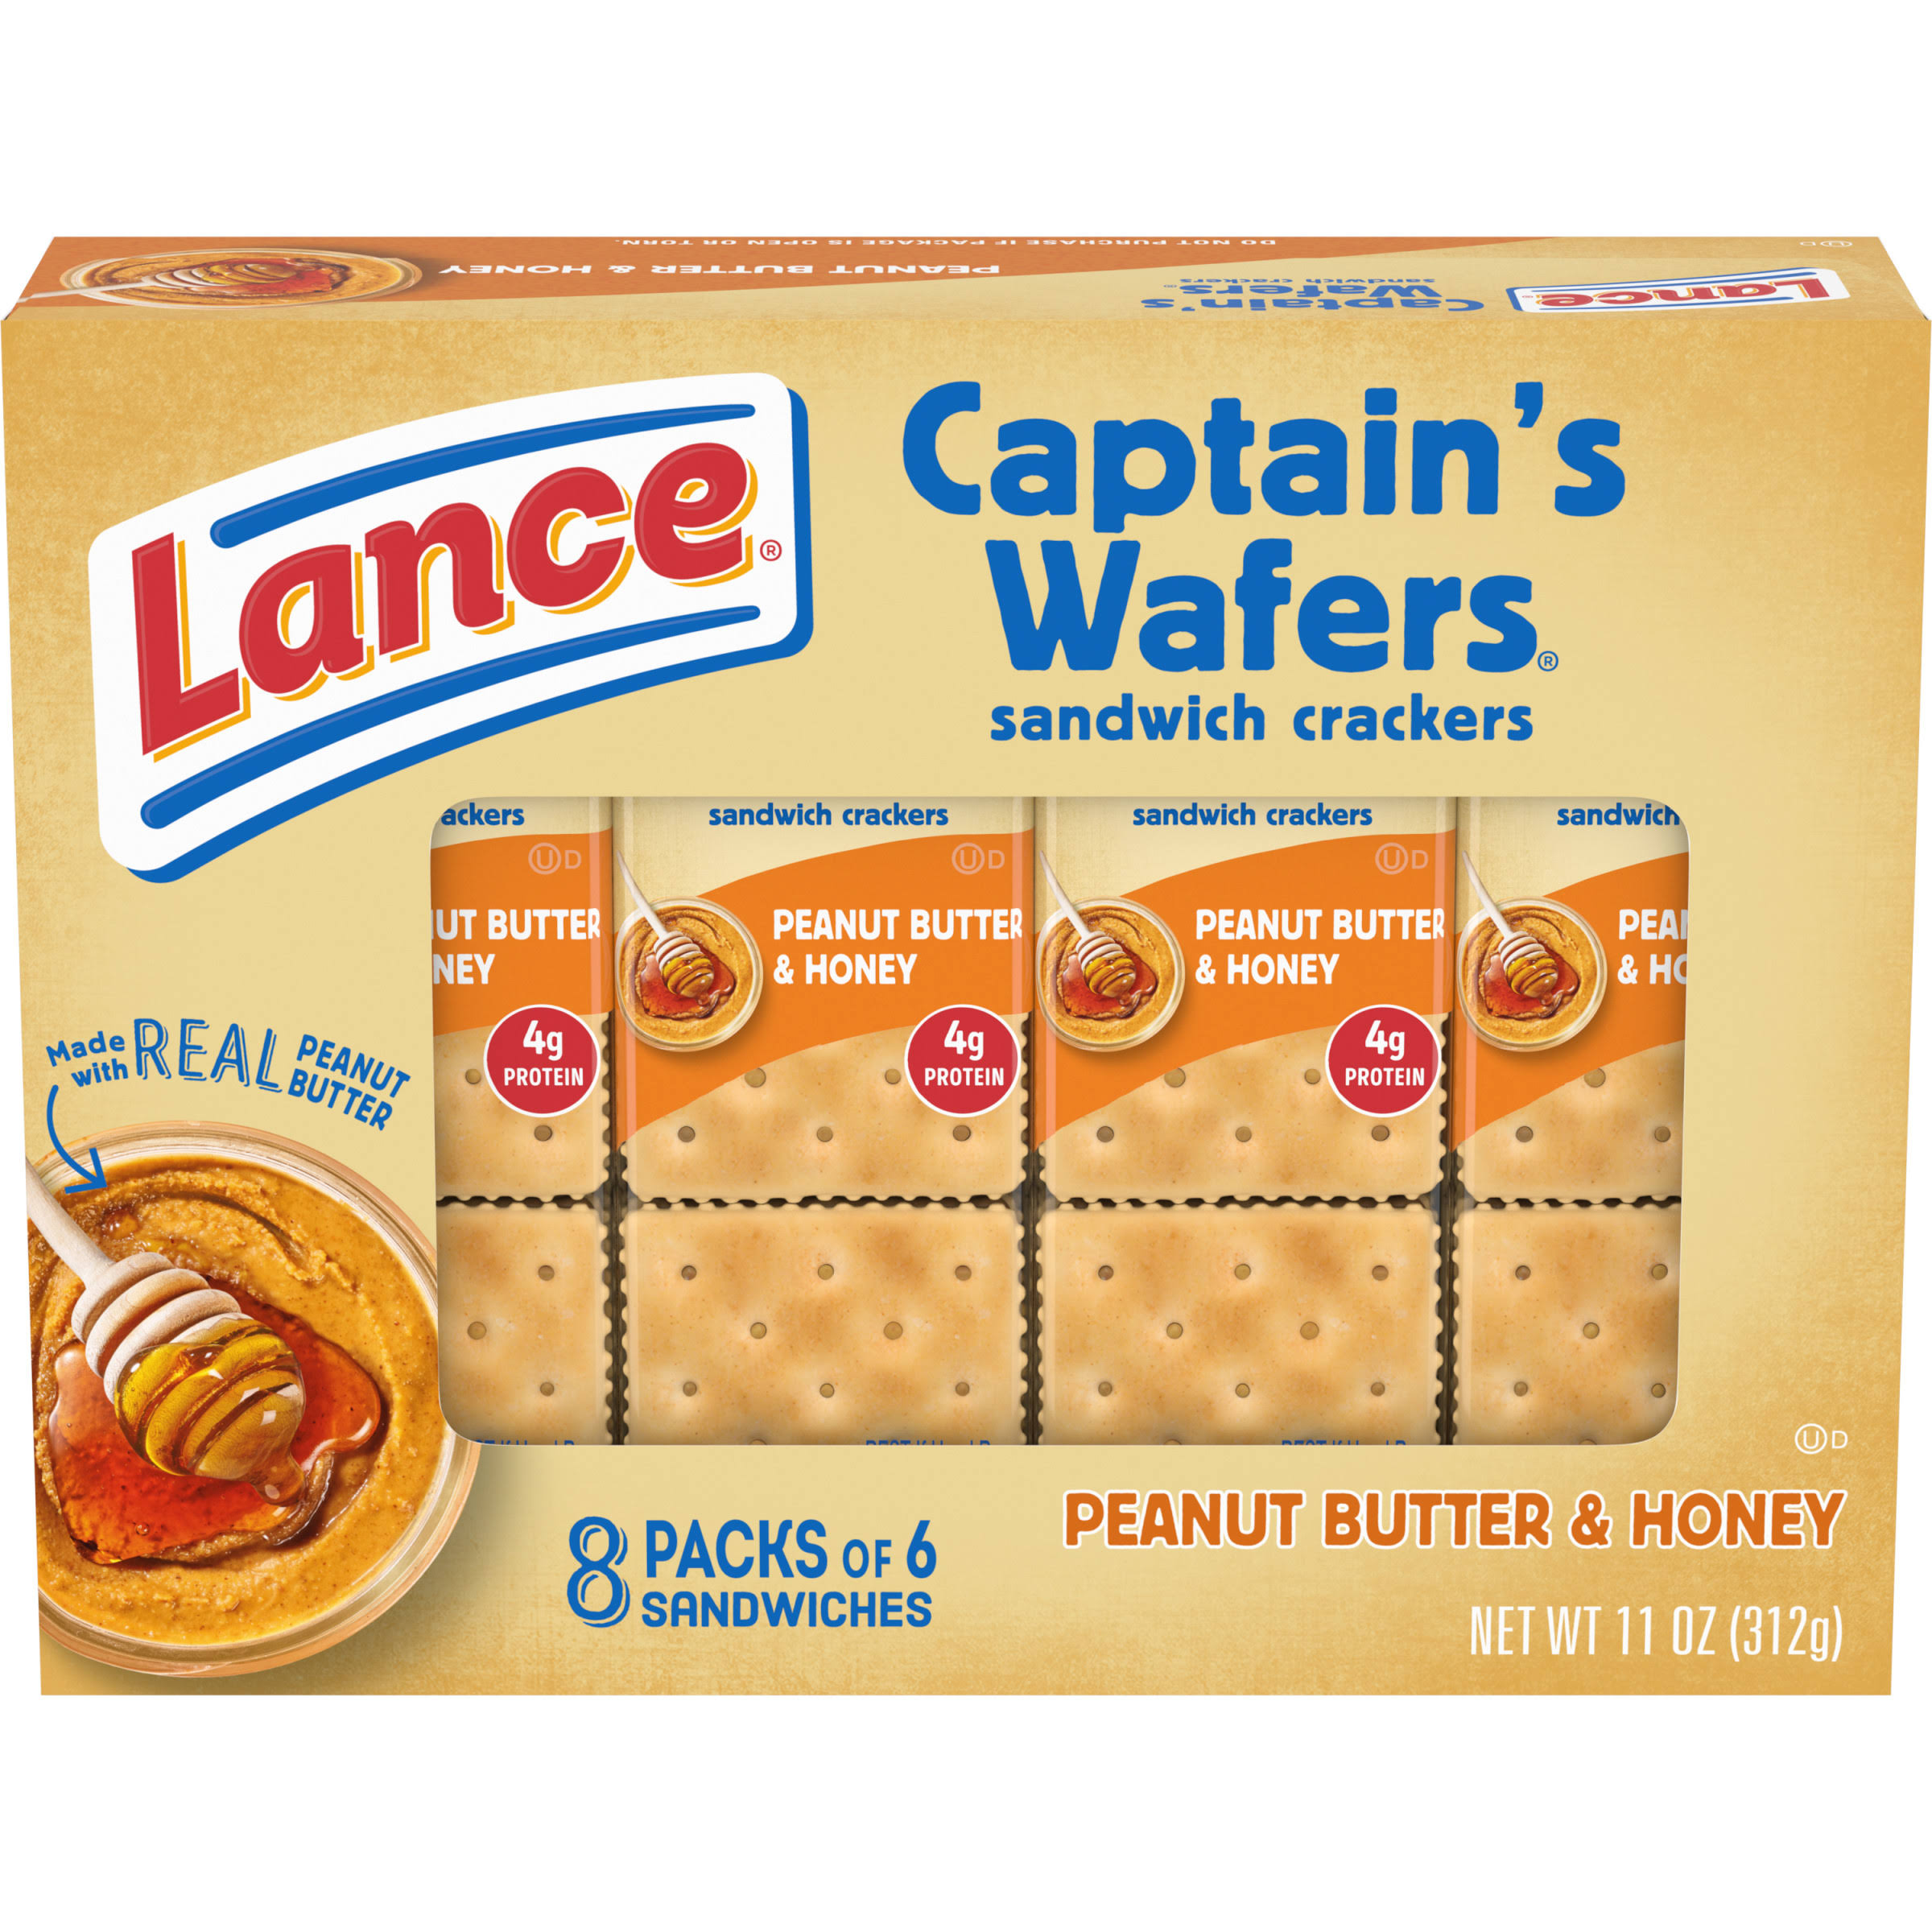 Lance Captain's Wafers Sandwich Crackers, Peanut Butter & Honey, 8 Pack - 8 6 sandwich packs, 11 oz